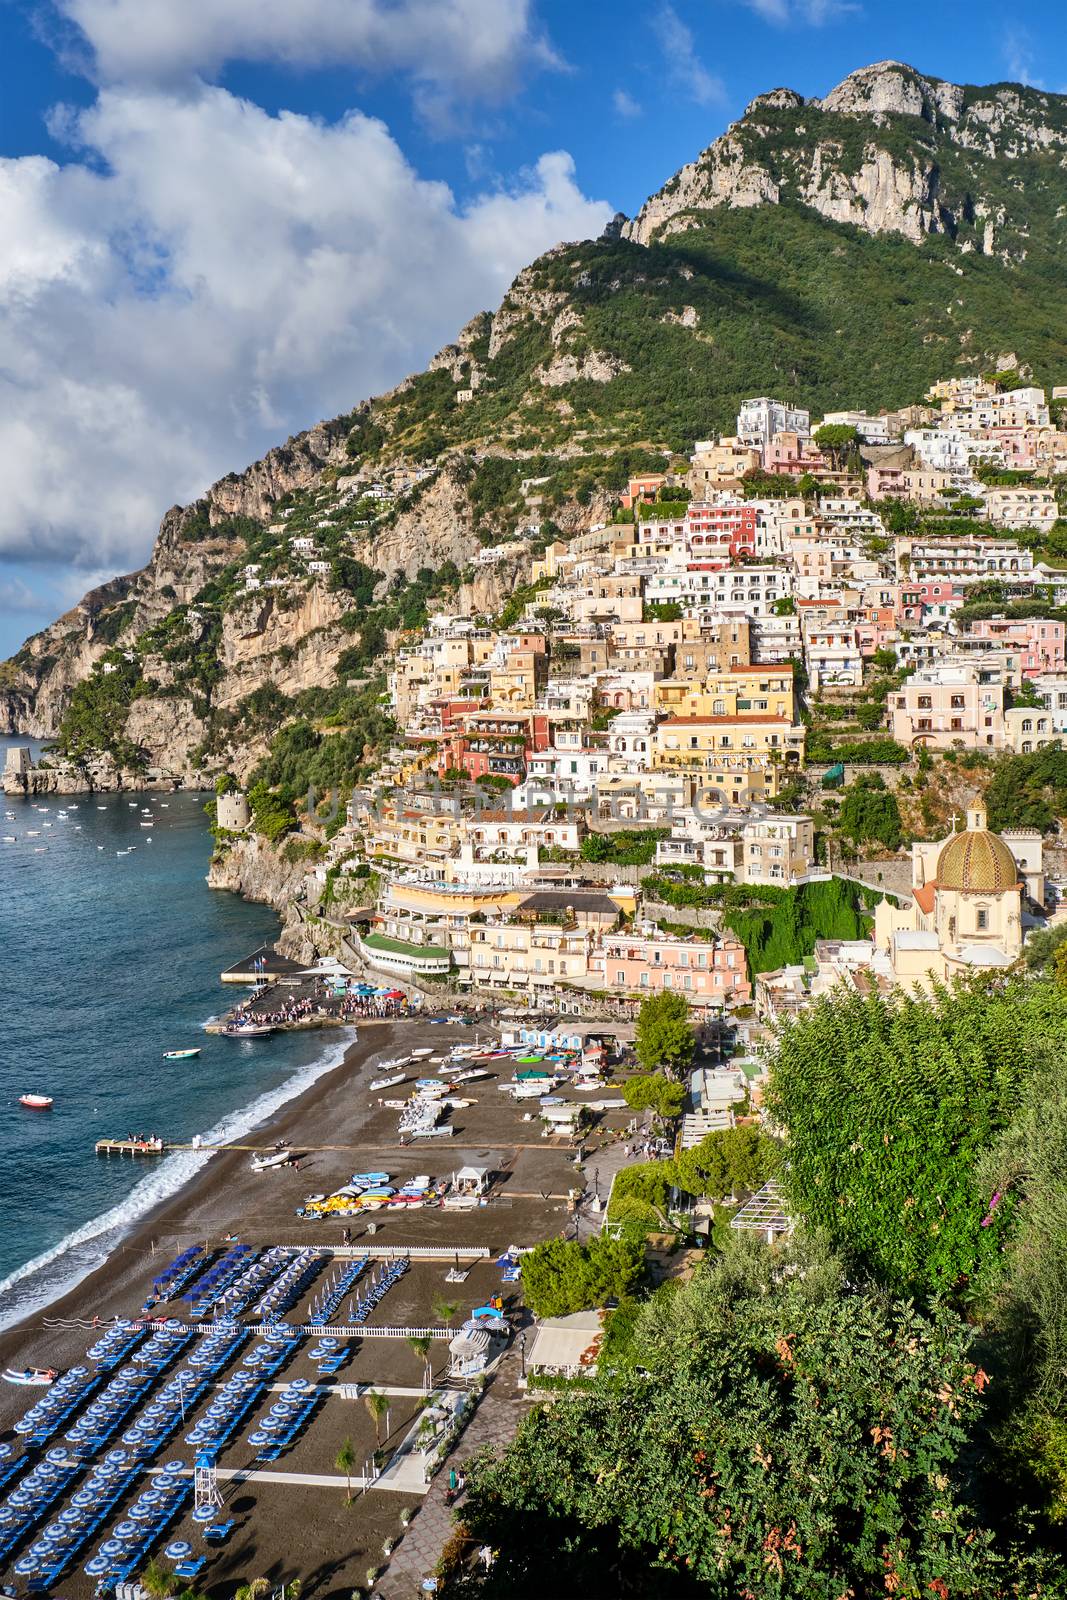 The famous seaside town of Positano on the italian Amalfi Coast